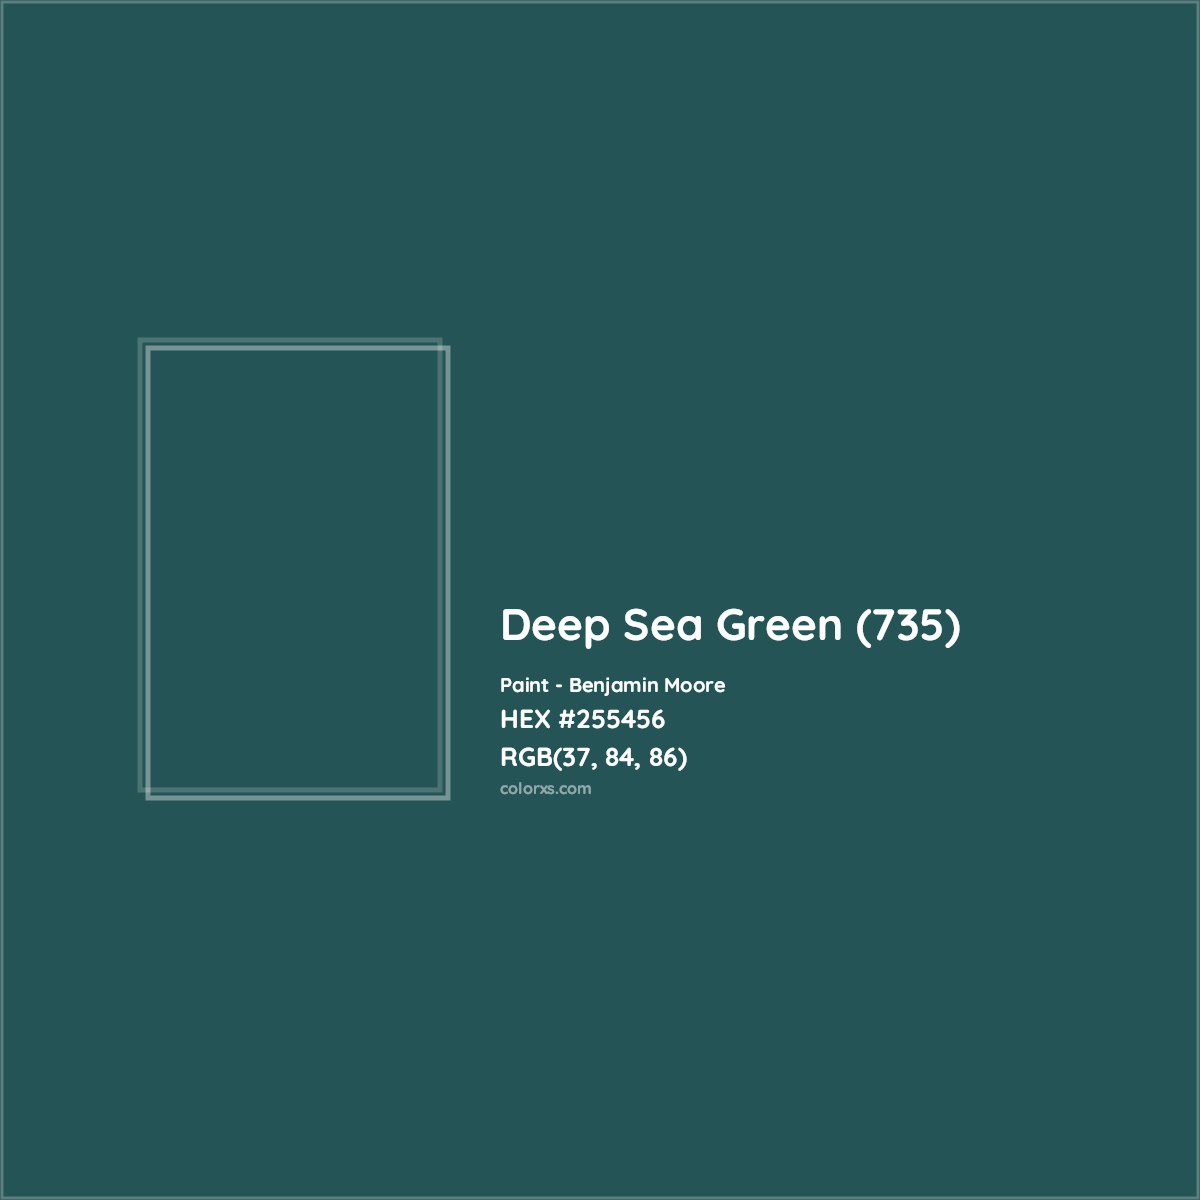 HEX #255456 Deep Sea Green (735) Paint Benjamin Moore - Color Code